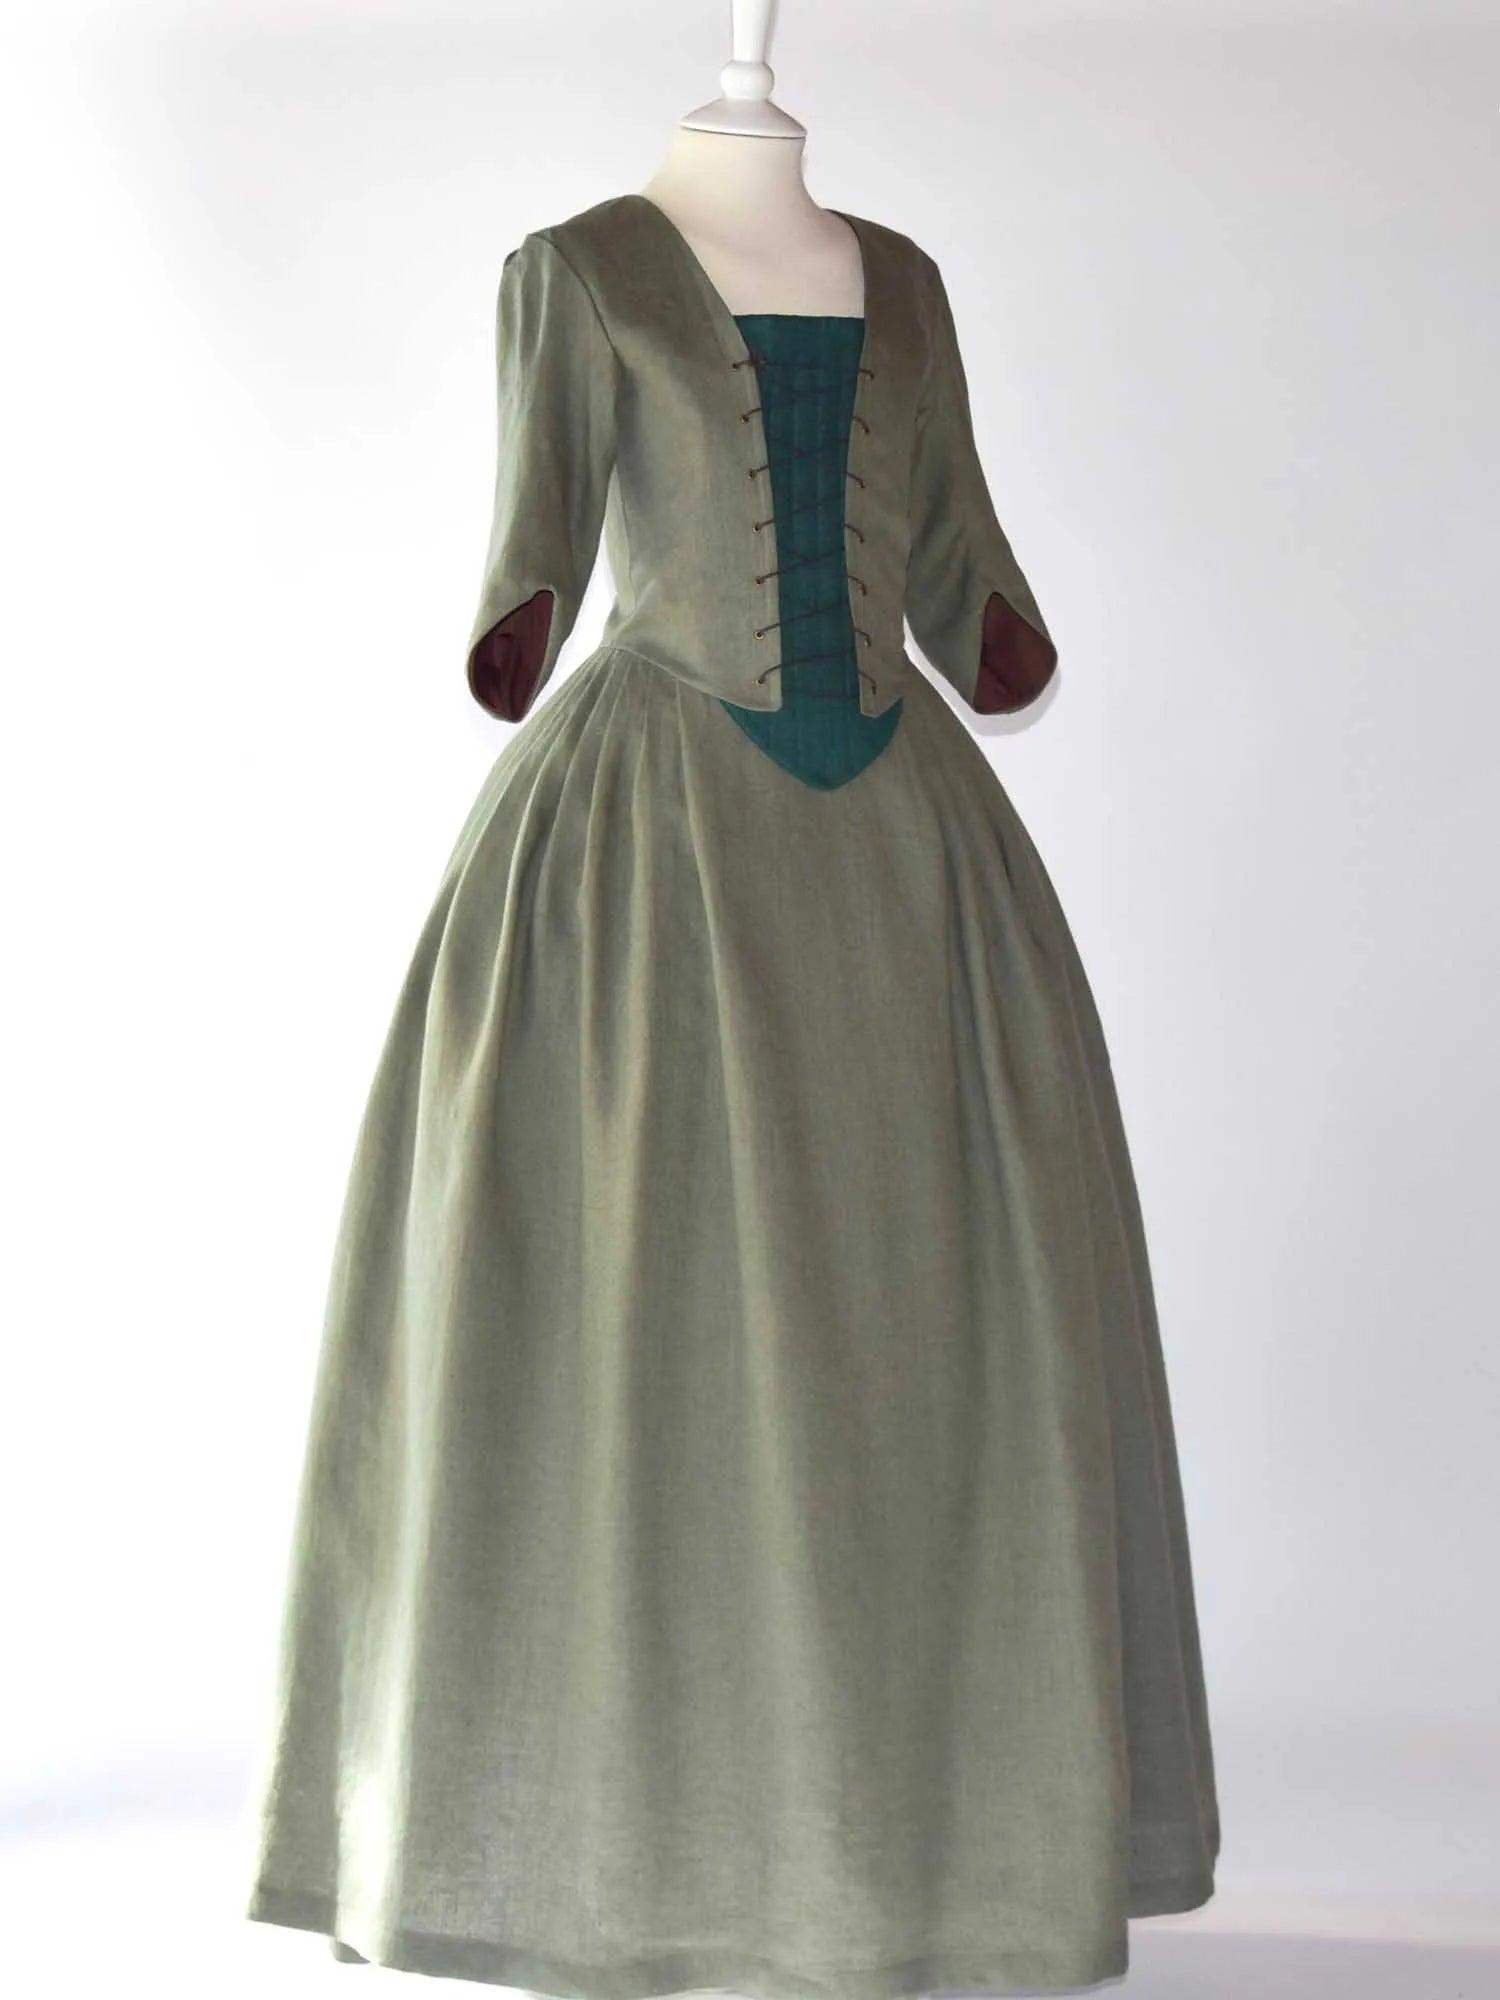 Historical Costume in Sage Green Linen - Atelier Serraspina